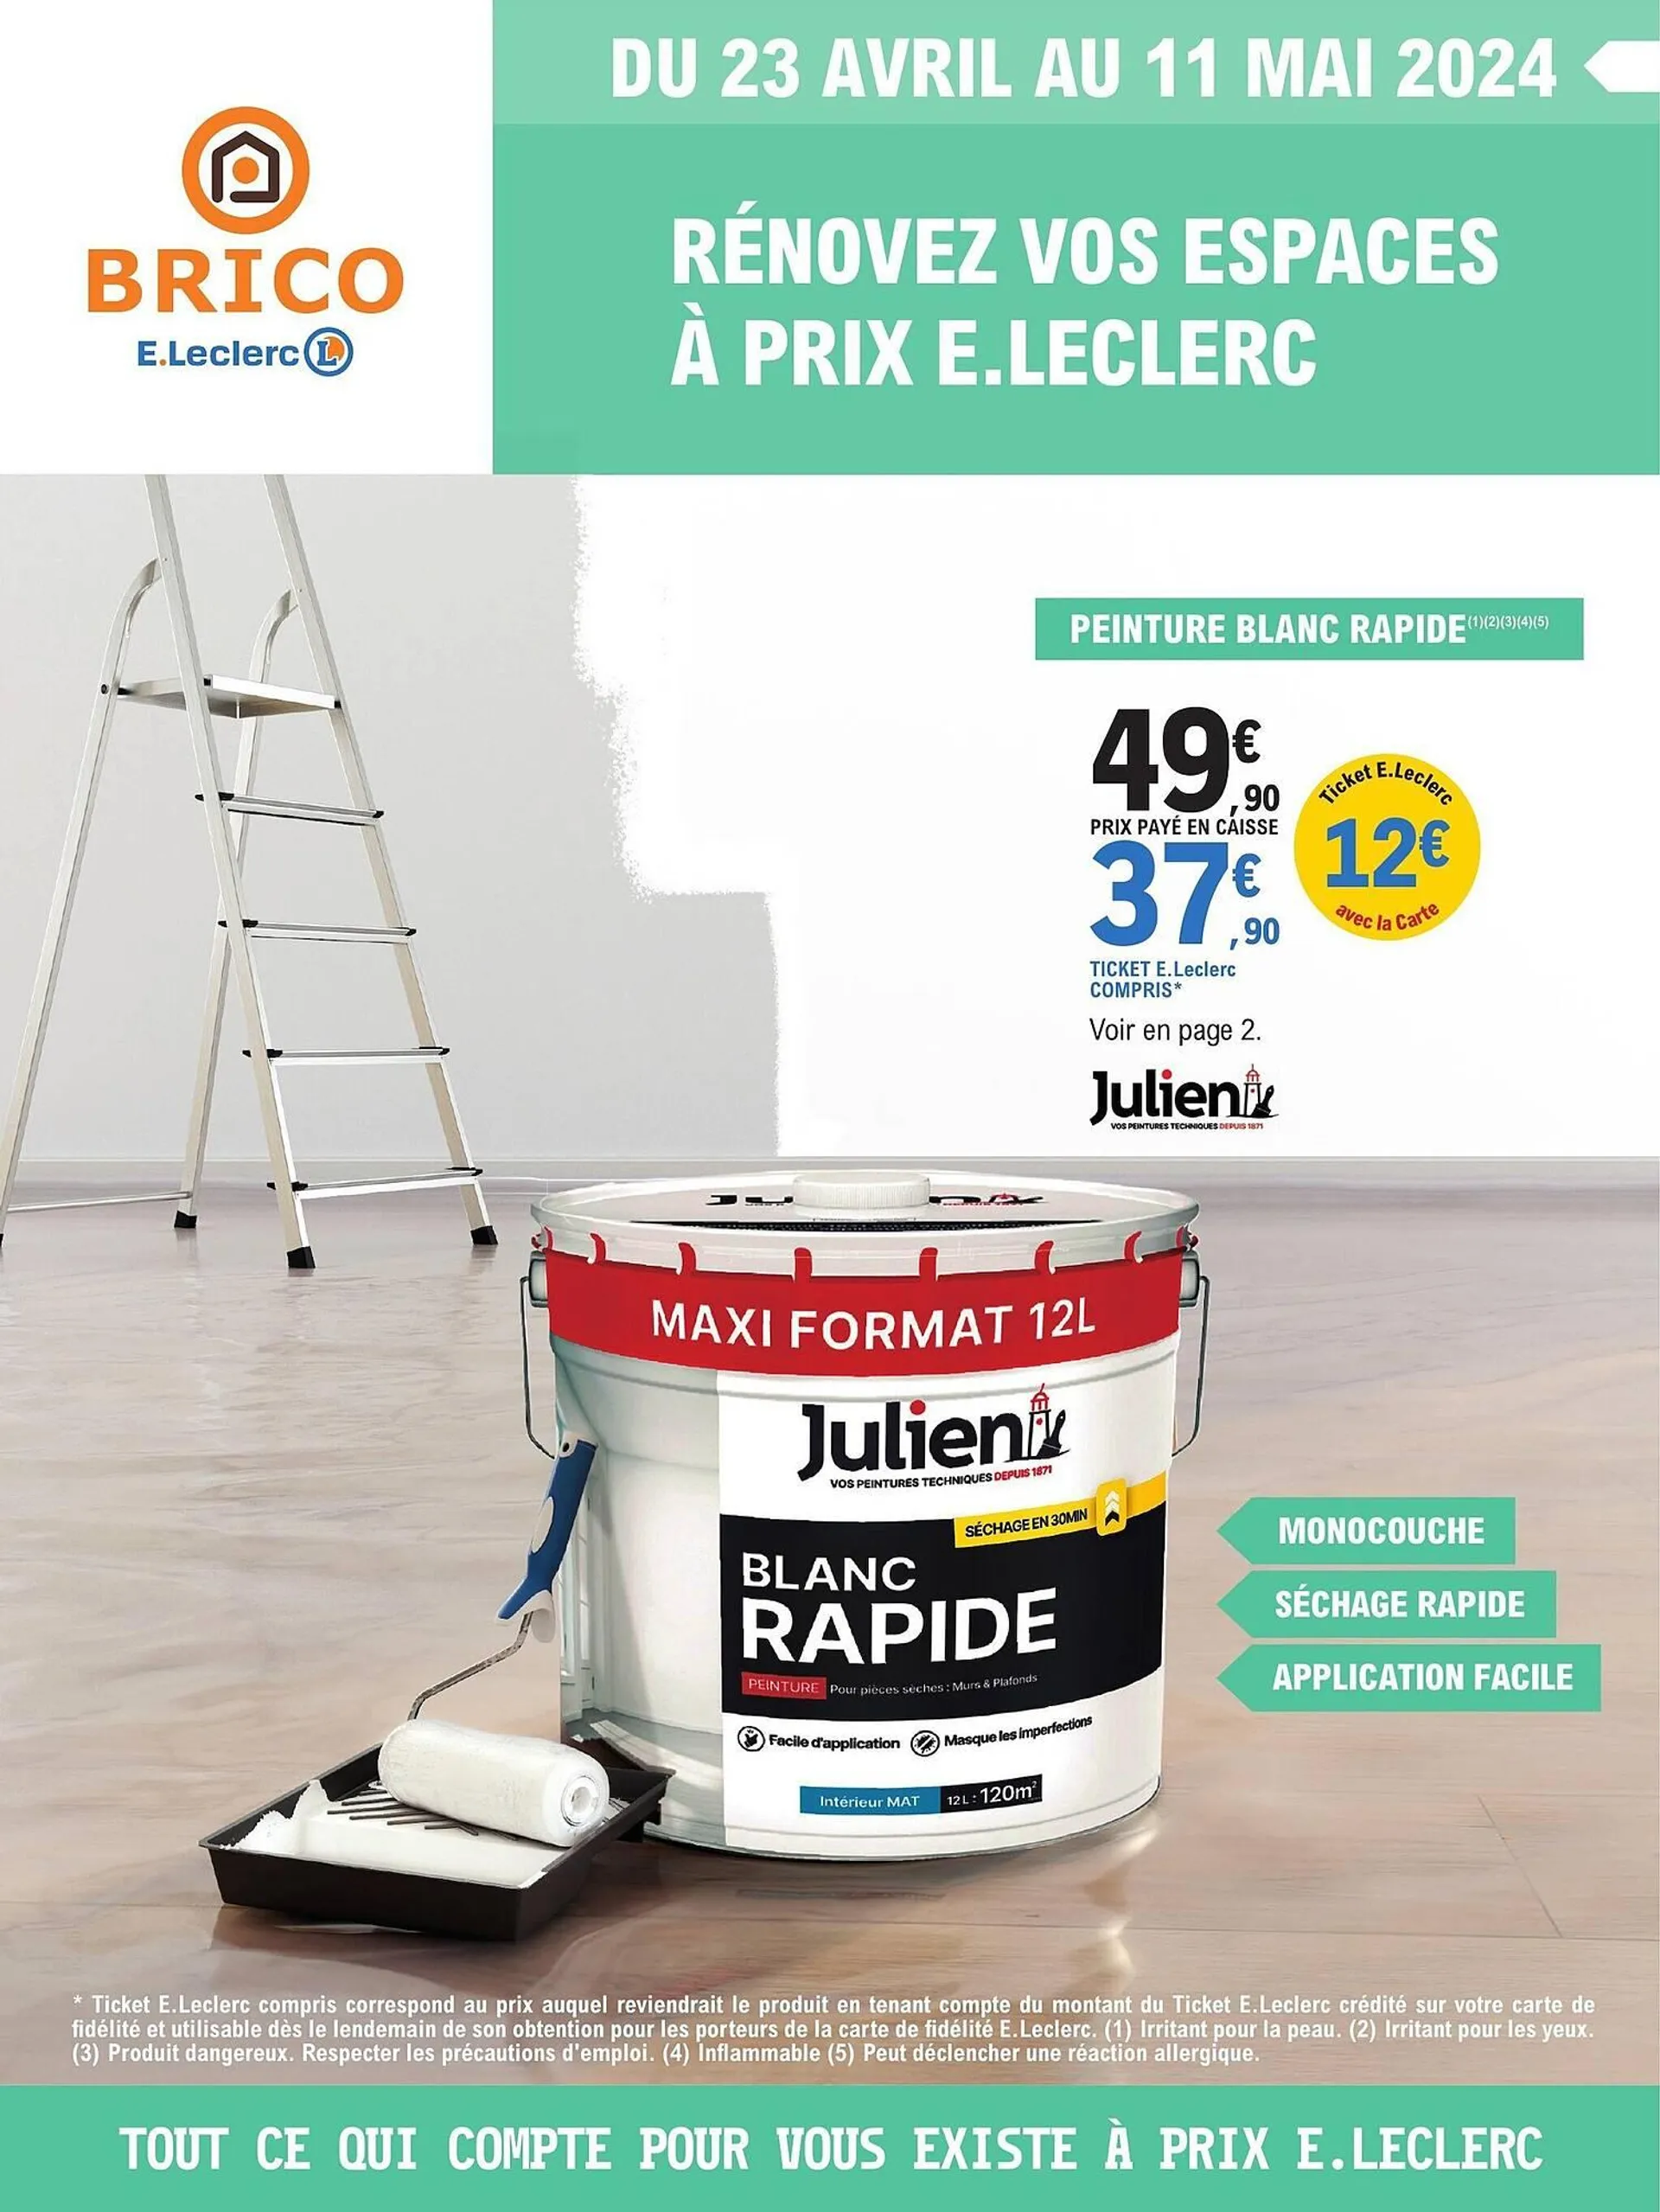 Catalogue E.Leclerc Brico - 1